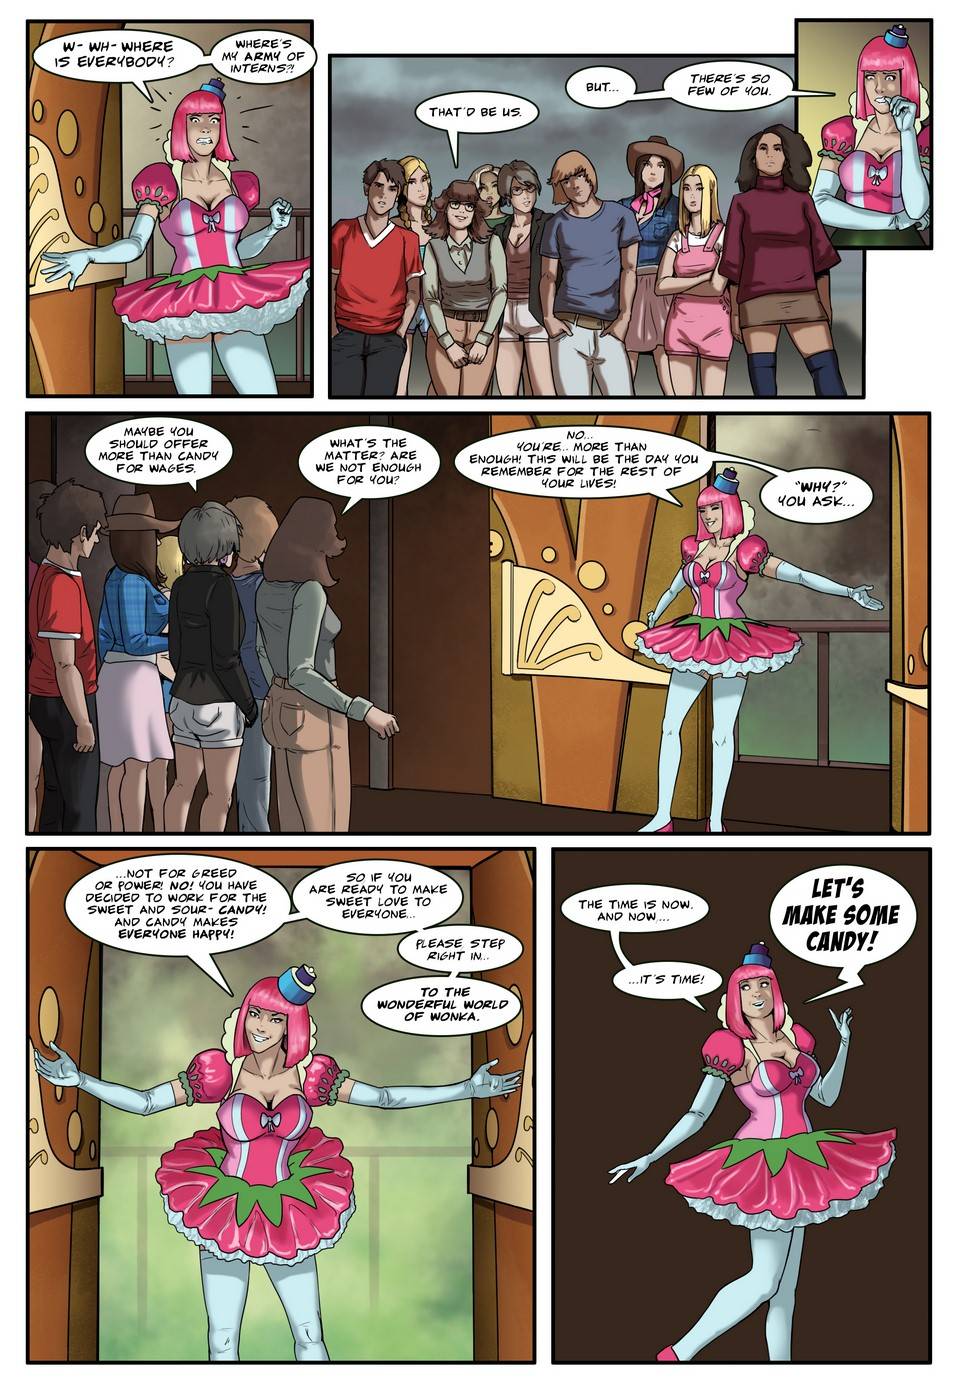 Wendy Wonka 2 Issue 1 Psychocolate Meltdown - Okayokayokok page 17